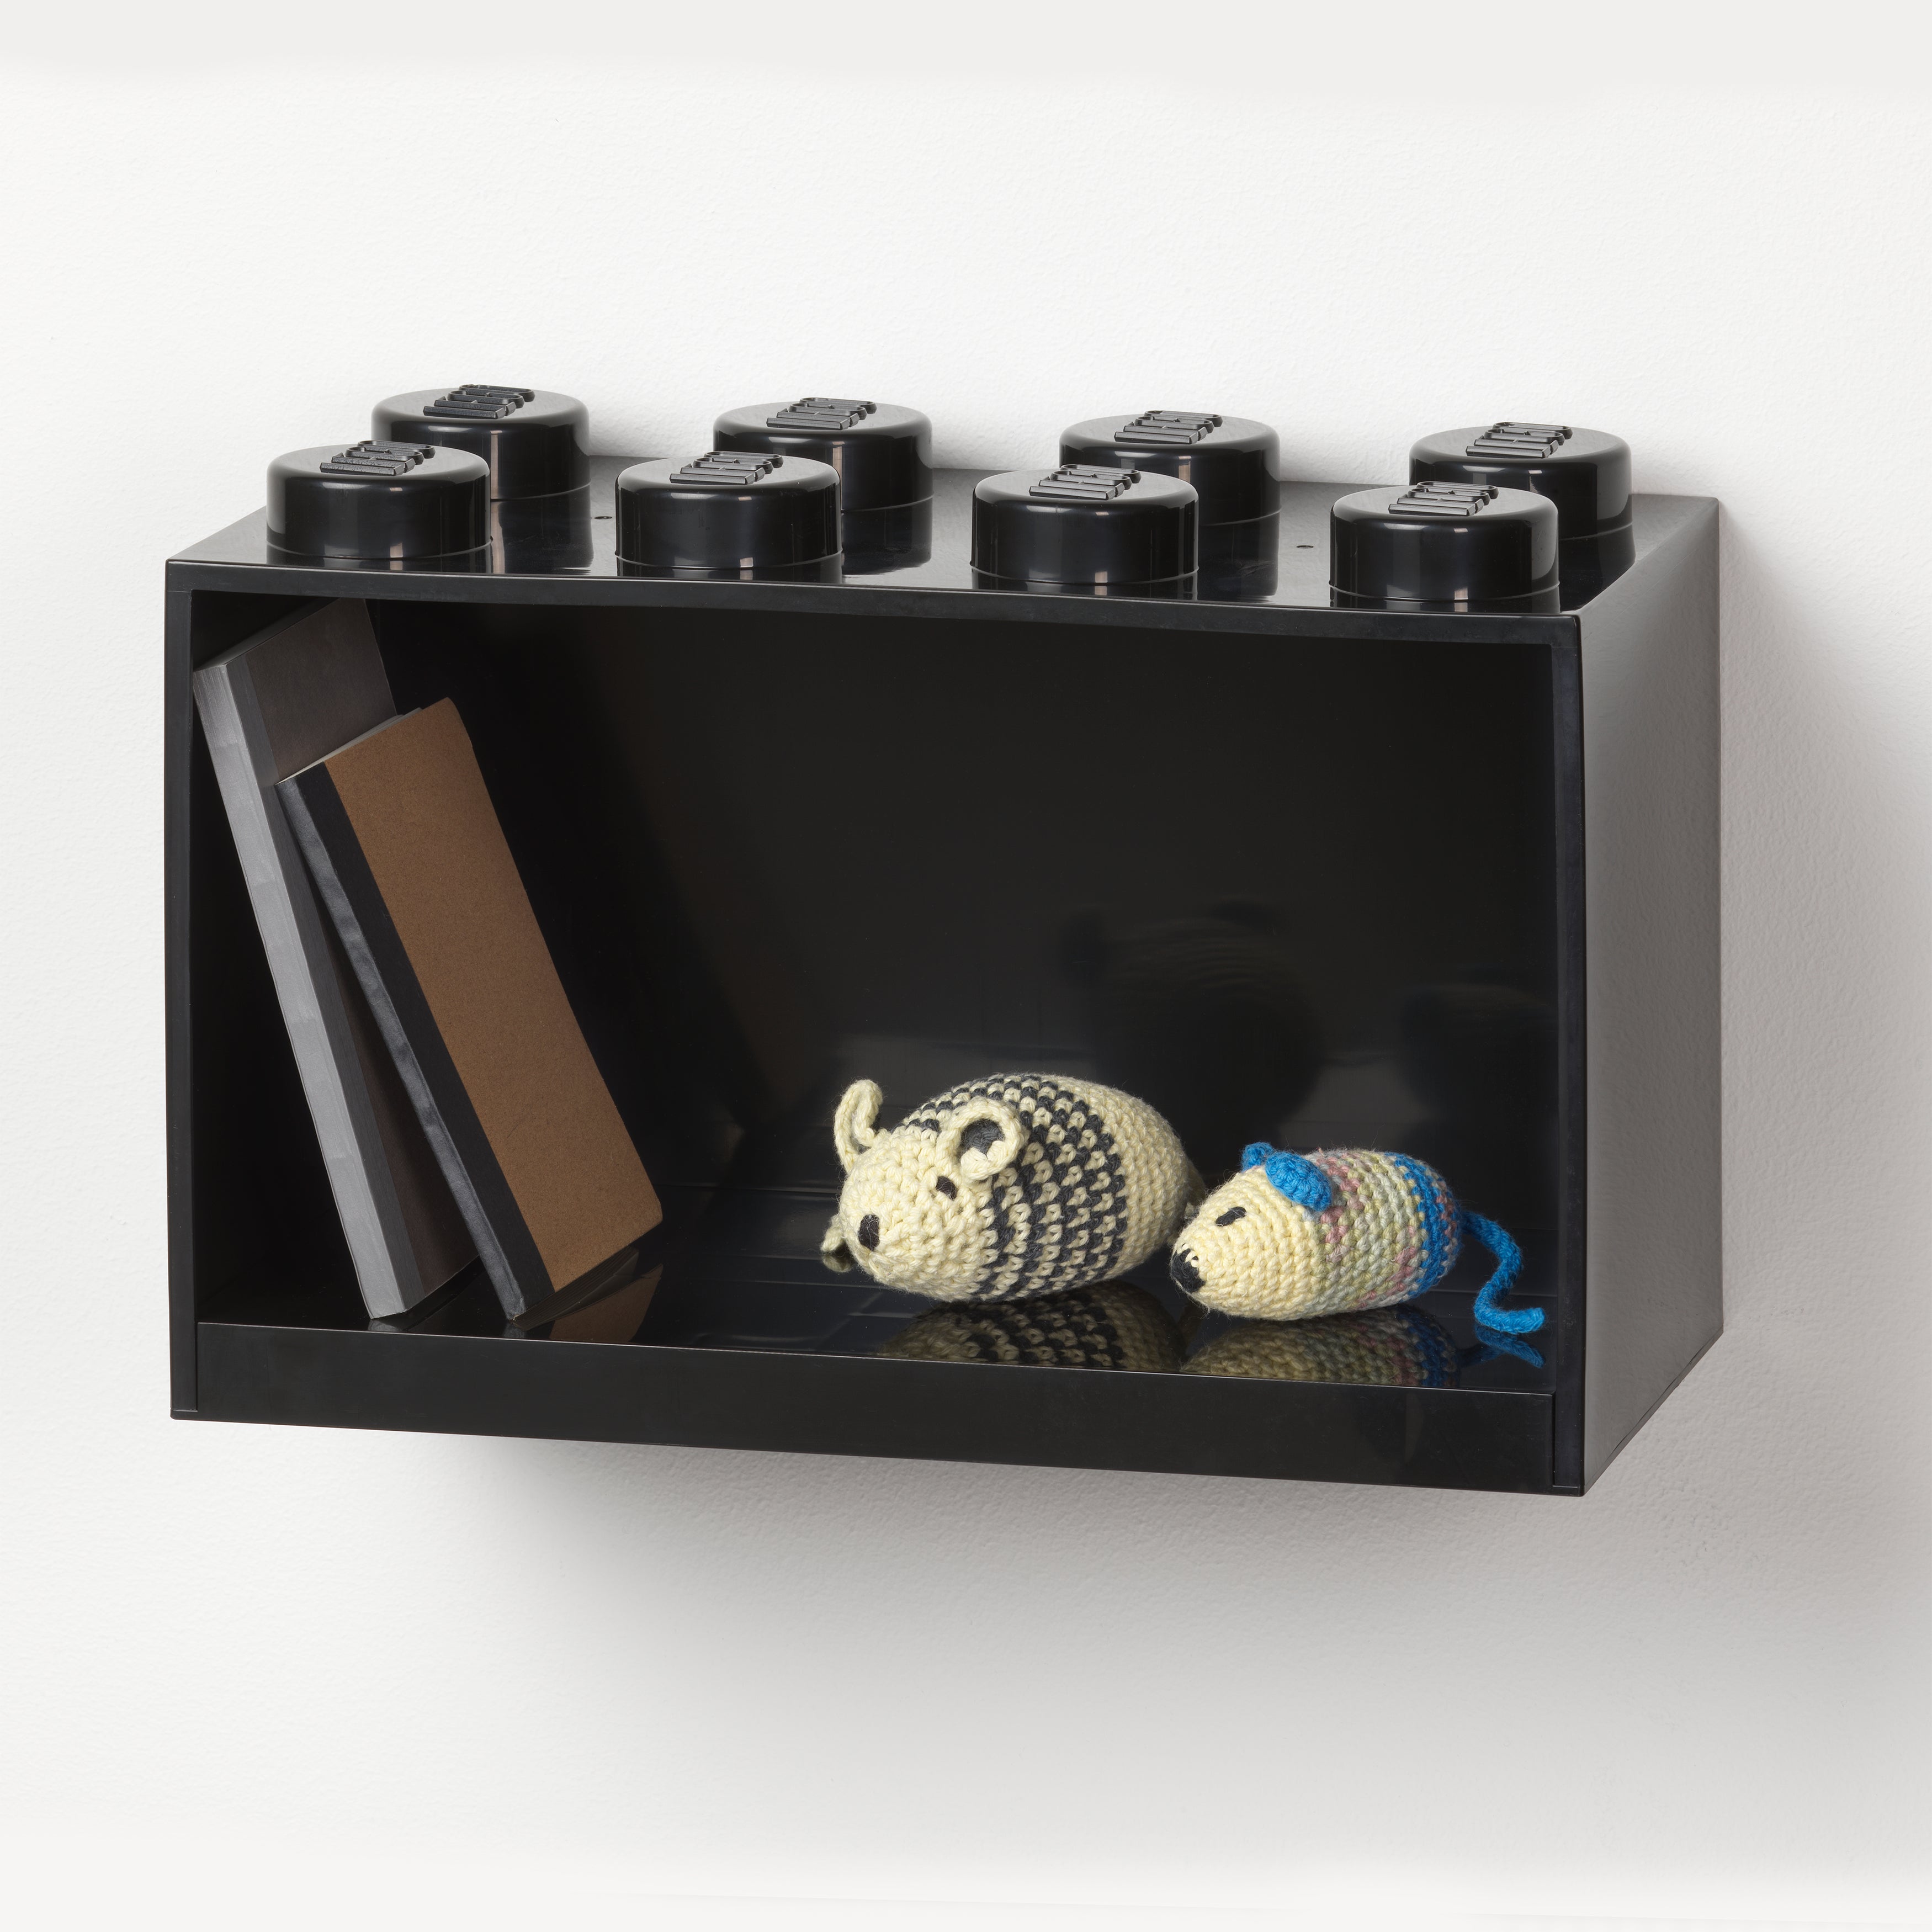 LEGO 8 Brick Shelf